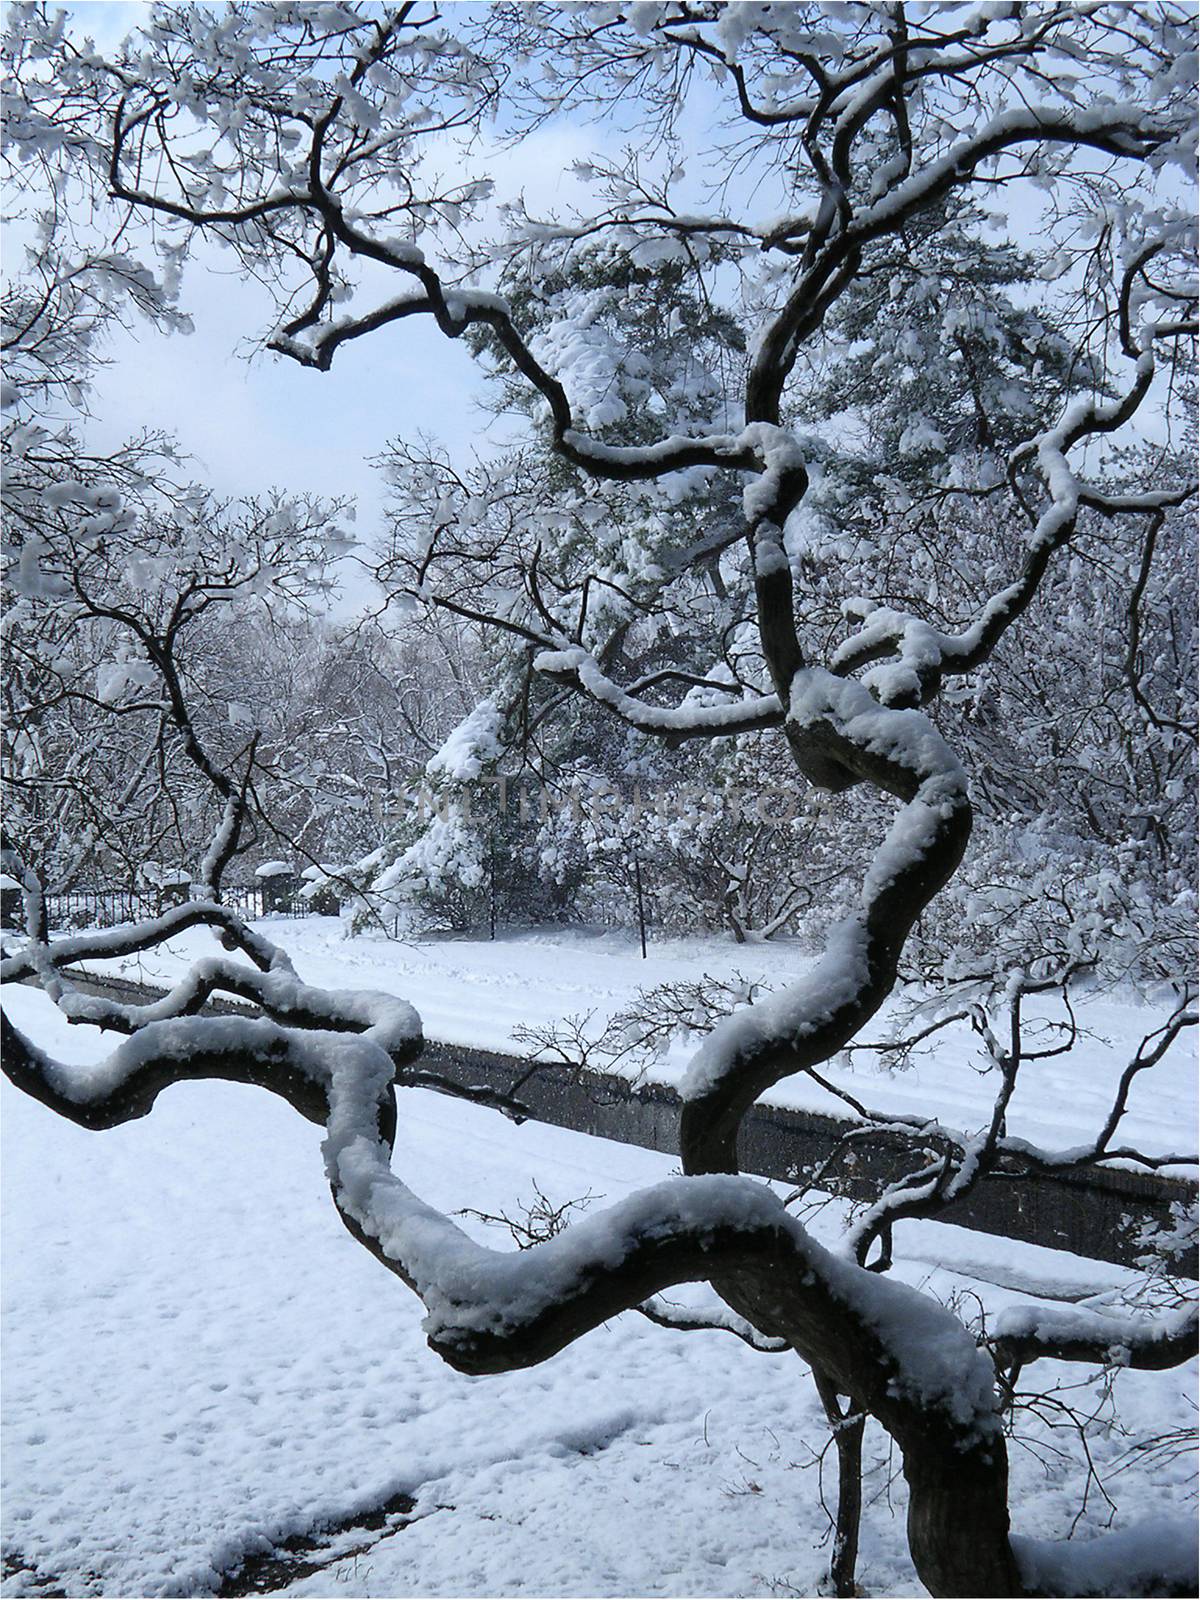 Winter park. Snow on a tree branch.